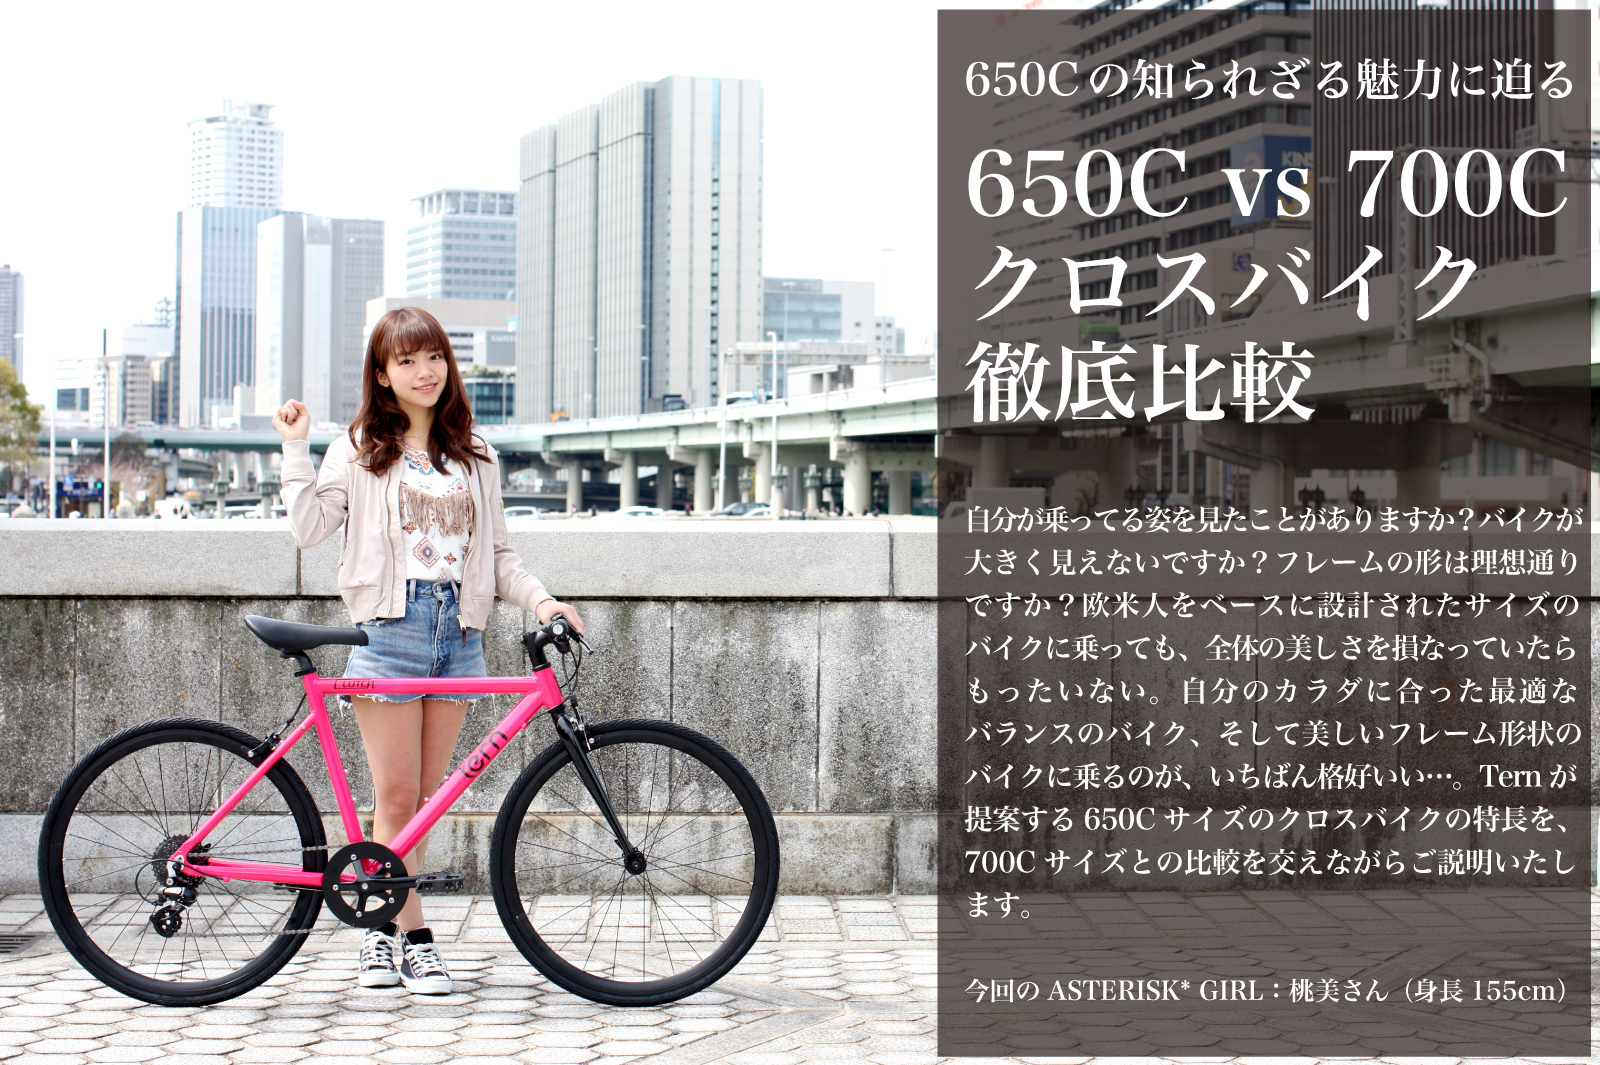 Tern Bicycles Japan Official Blog 650cの知られざる魅力に迫る 650cvs700c クロスバイク徹底比較